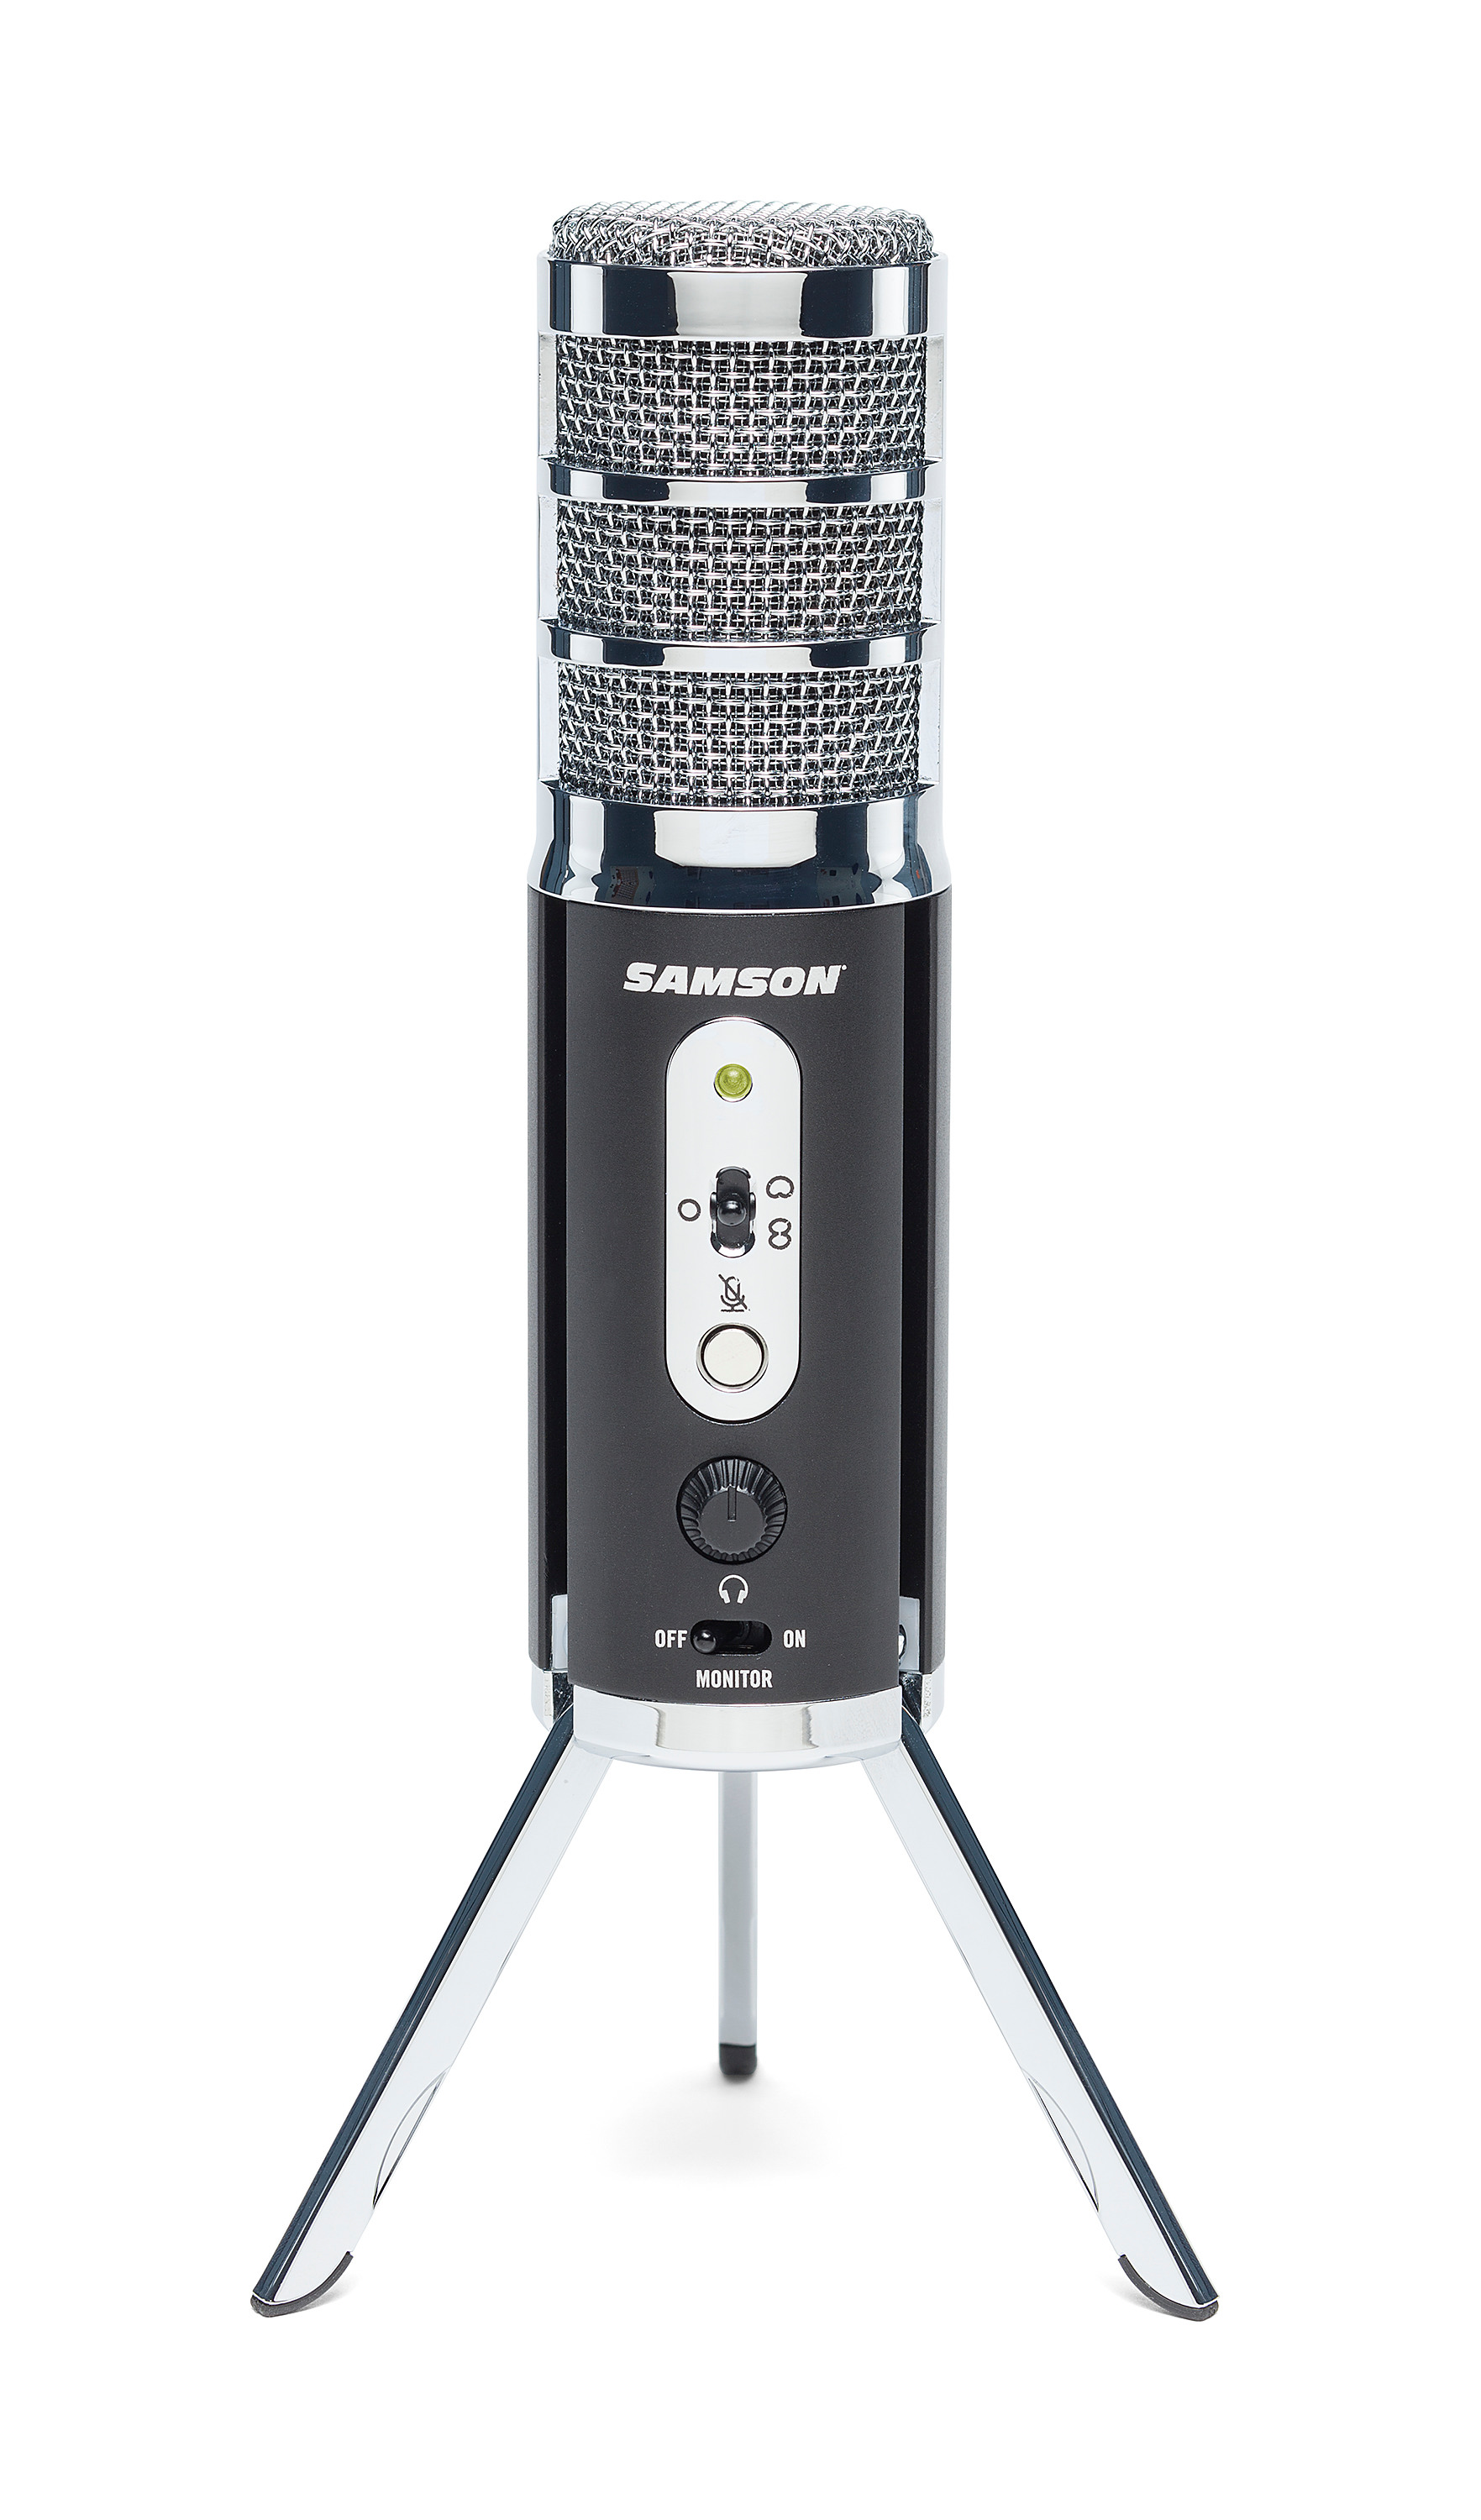 SAMSON Satellite USB Microphone SASAT Pro USB/iOS for broadcast